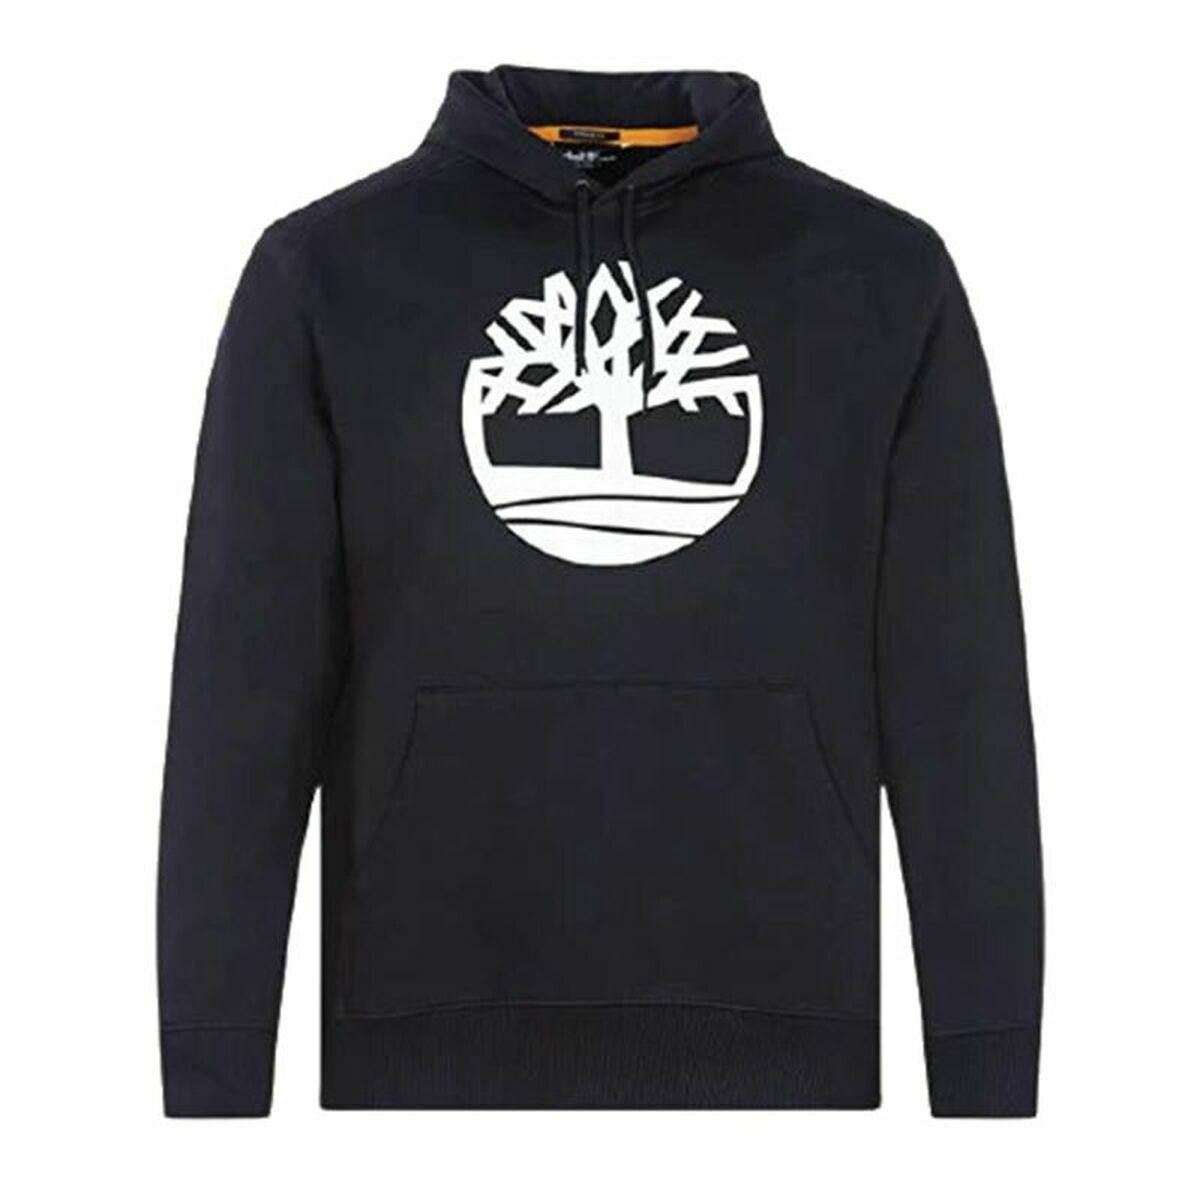 Kaufe Herren Sweater mit Kapuze Timberland Core Logo Schwarz bei AWK Flagship um € 76.00